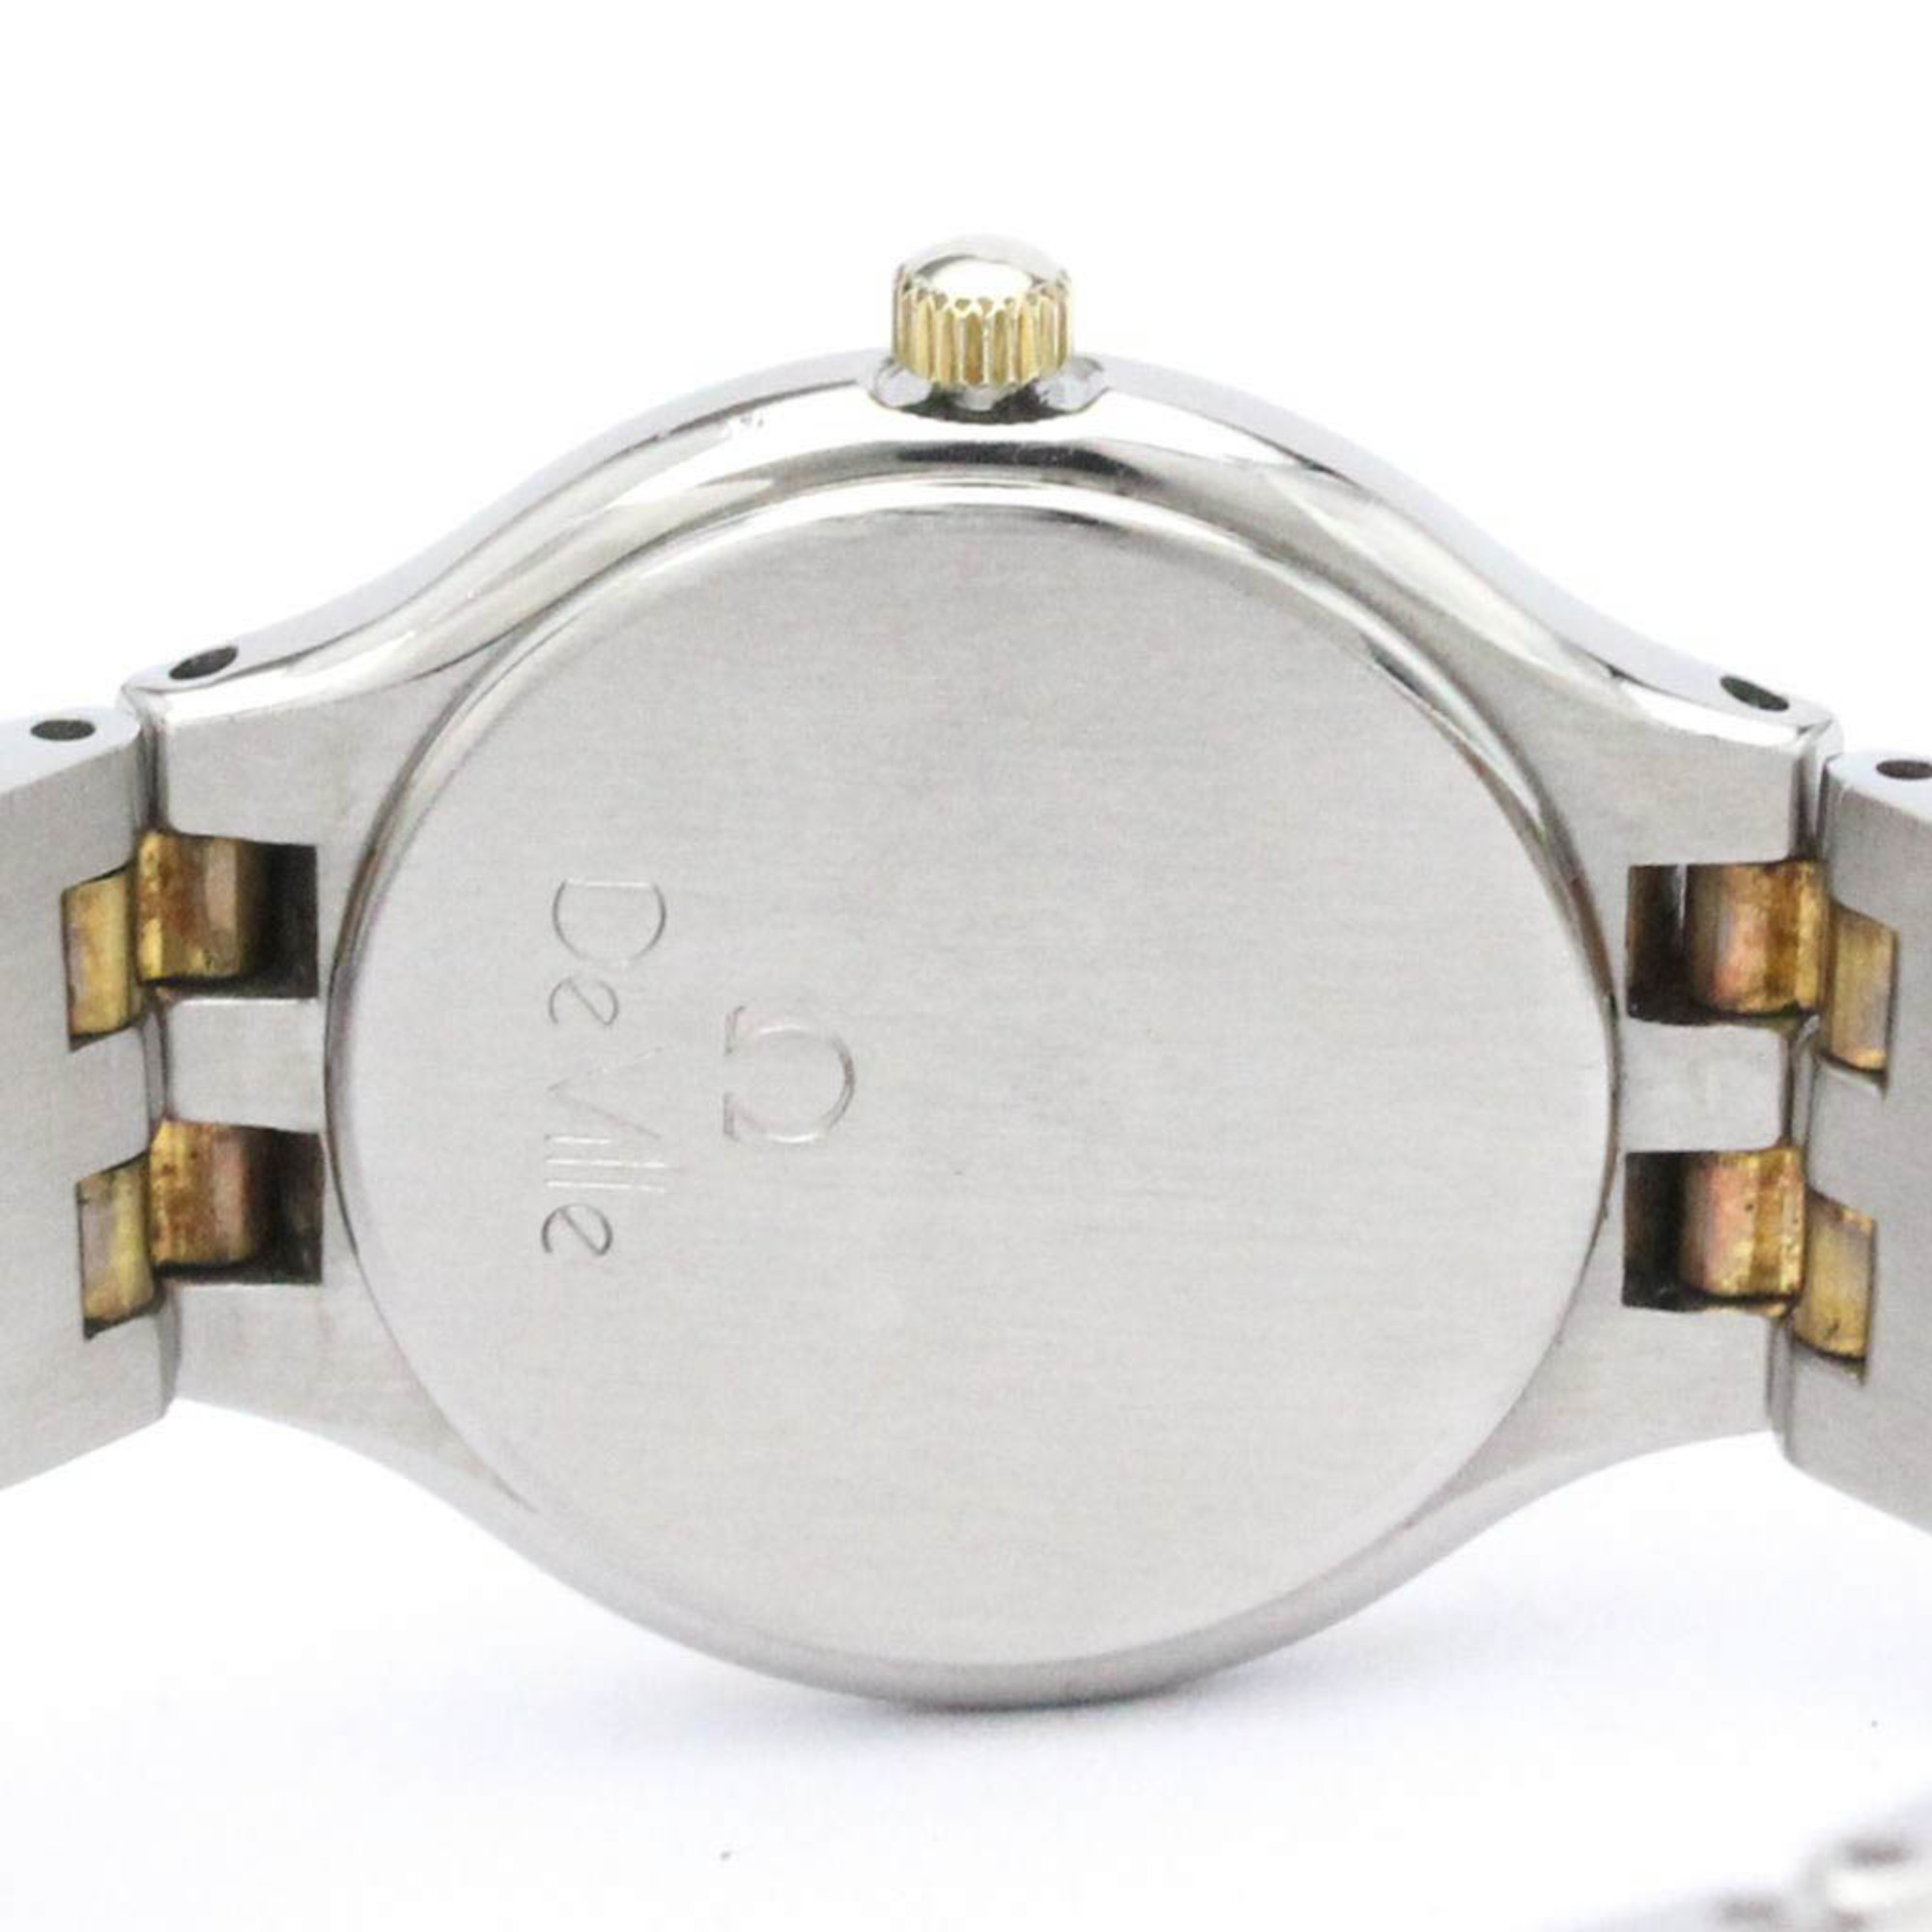 Polished OMEGA De Ville Symbol K18 Gold Stainless Steel Ladies Watch BF565456